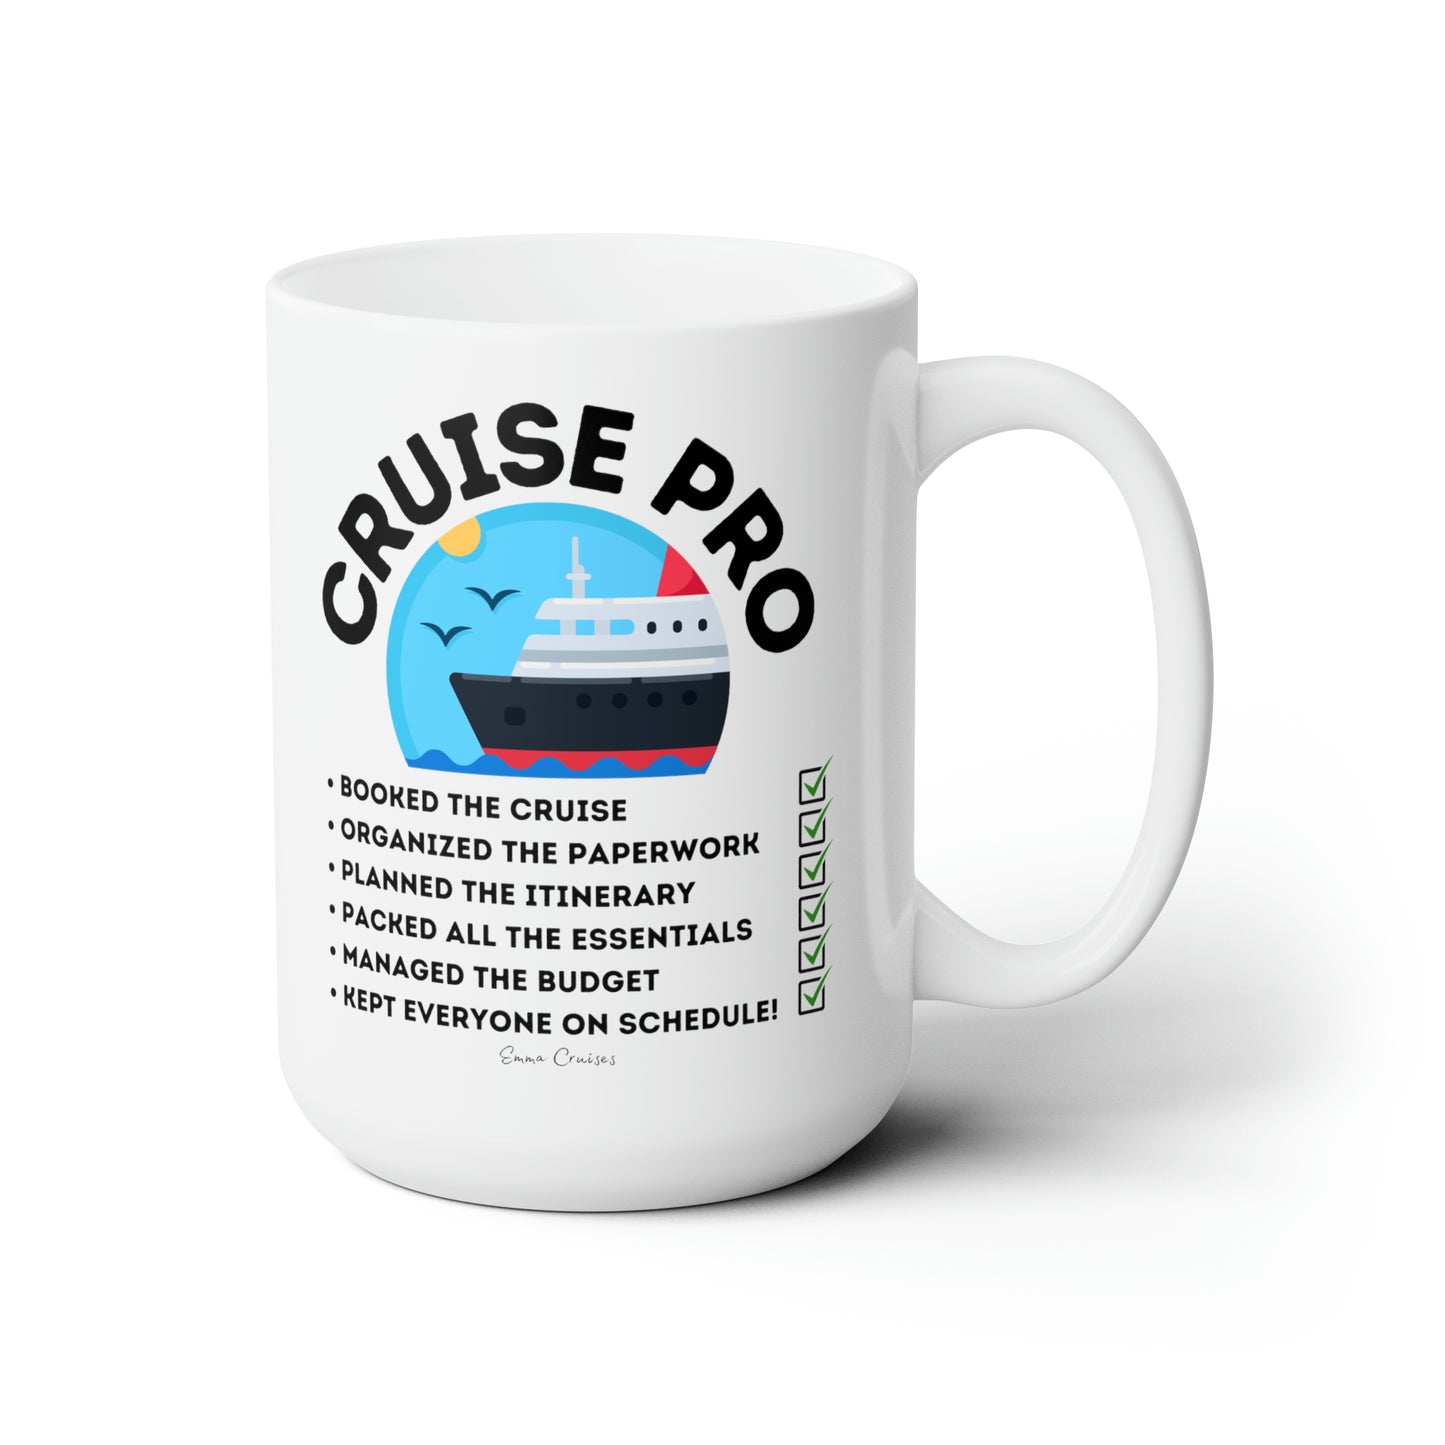 Soy un Cruise Pro - Taza de cerámica